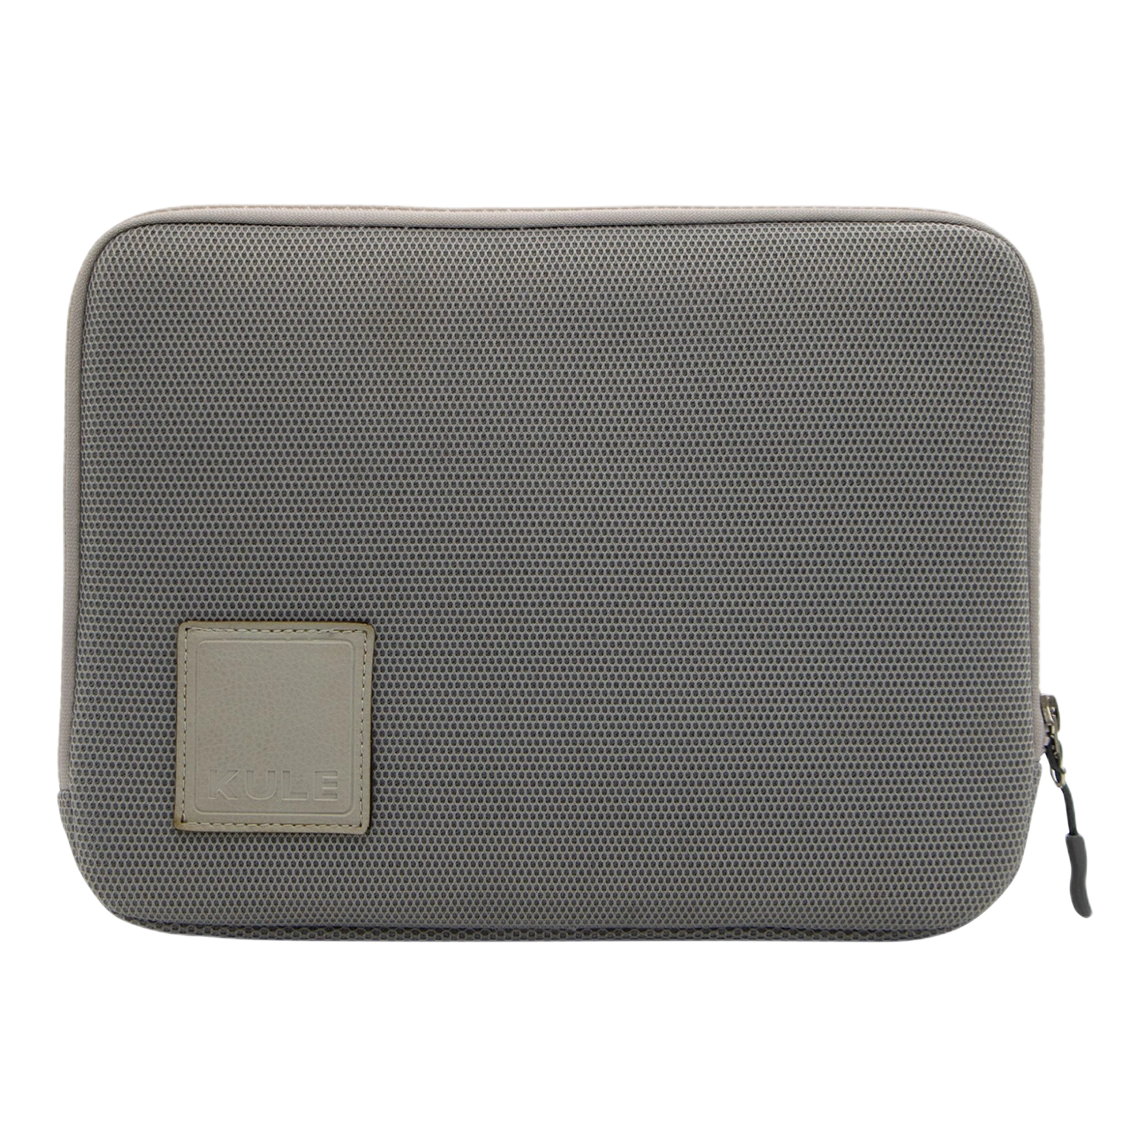 Kule Laptop Sleeve 13-inch KL1350